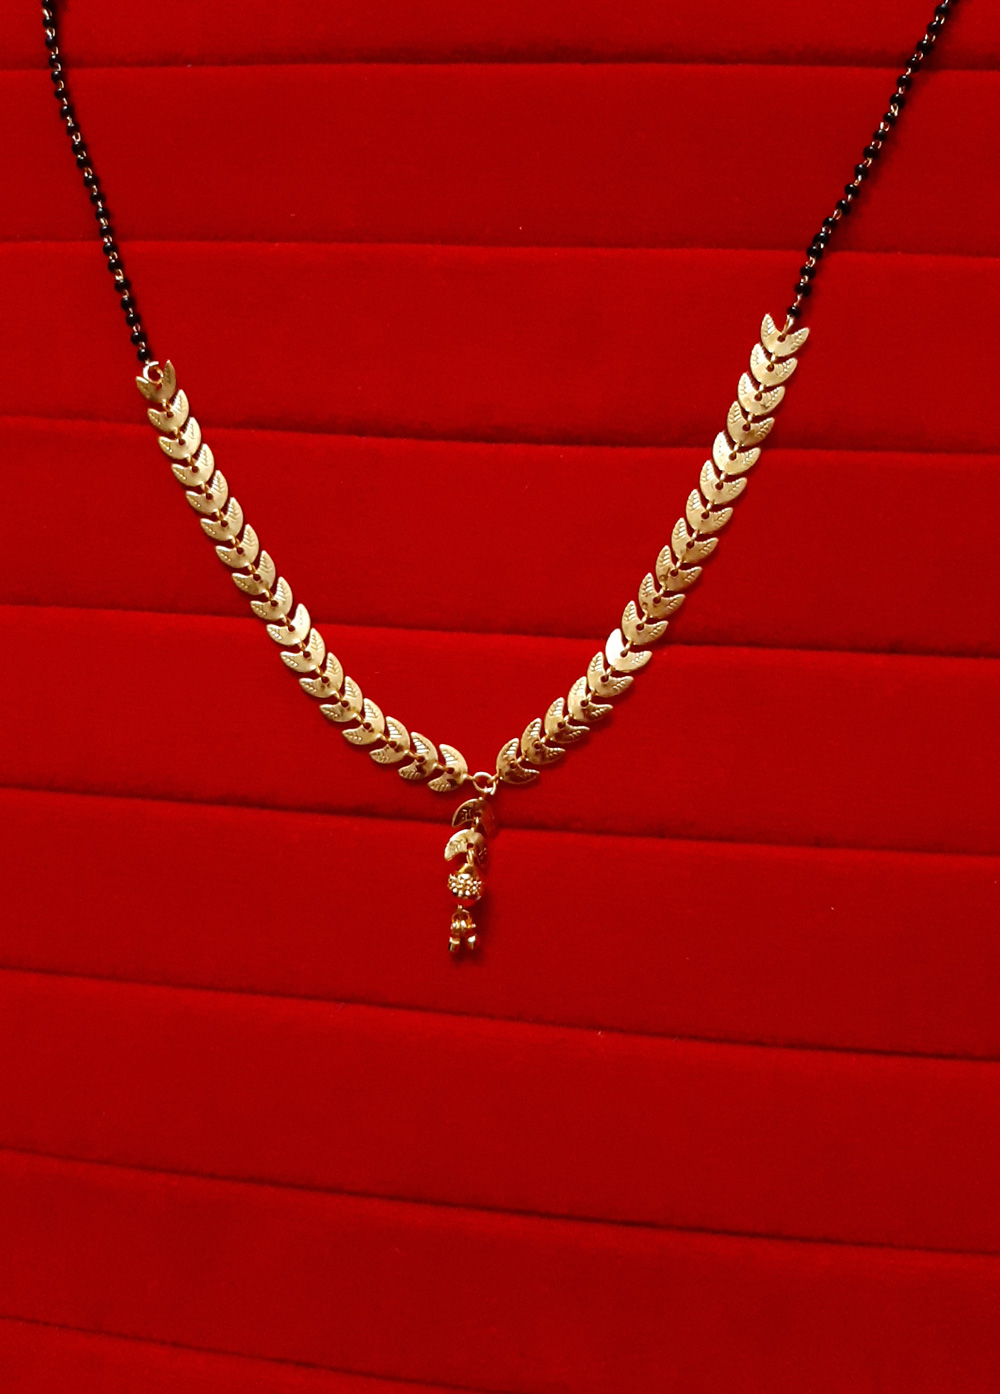 Daily Wear Golden Small Designer Sleek Mangalsutra Gift For Wife DM21 